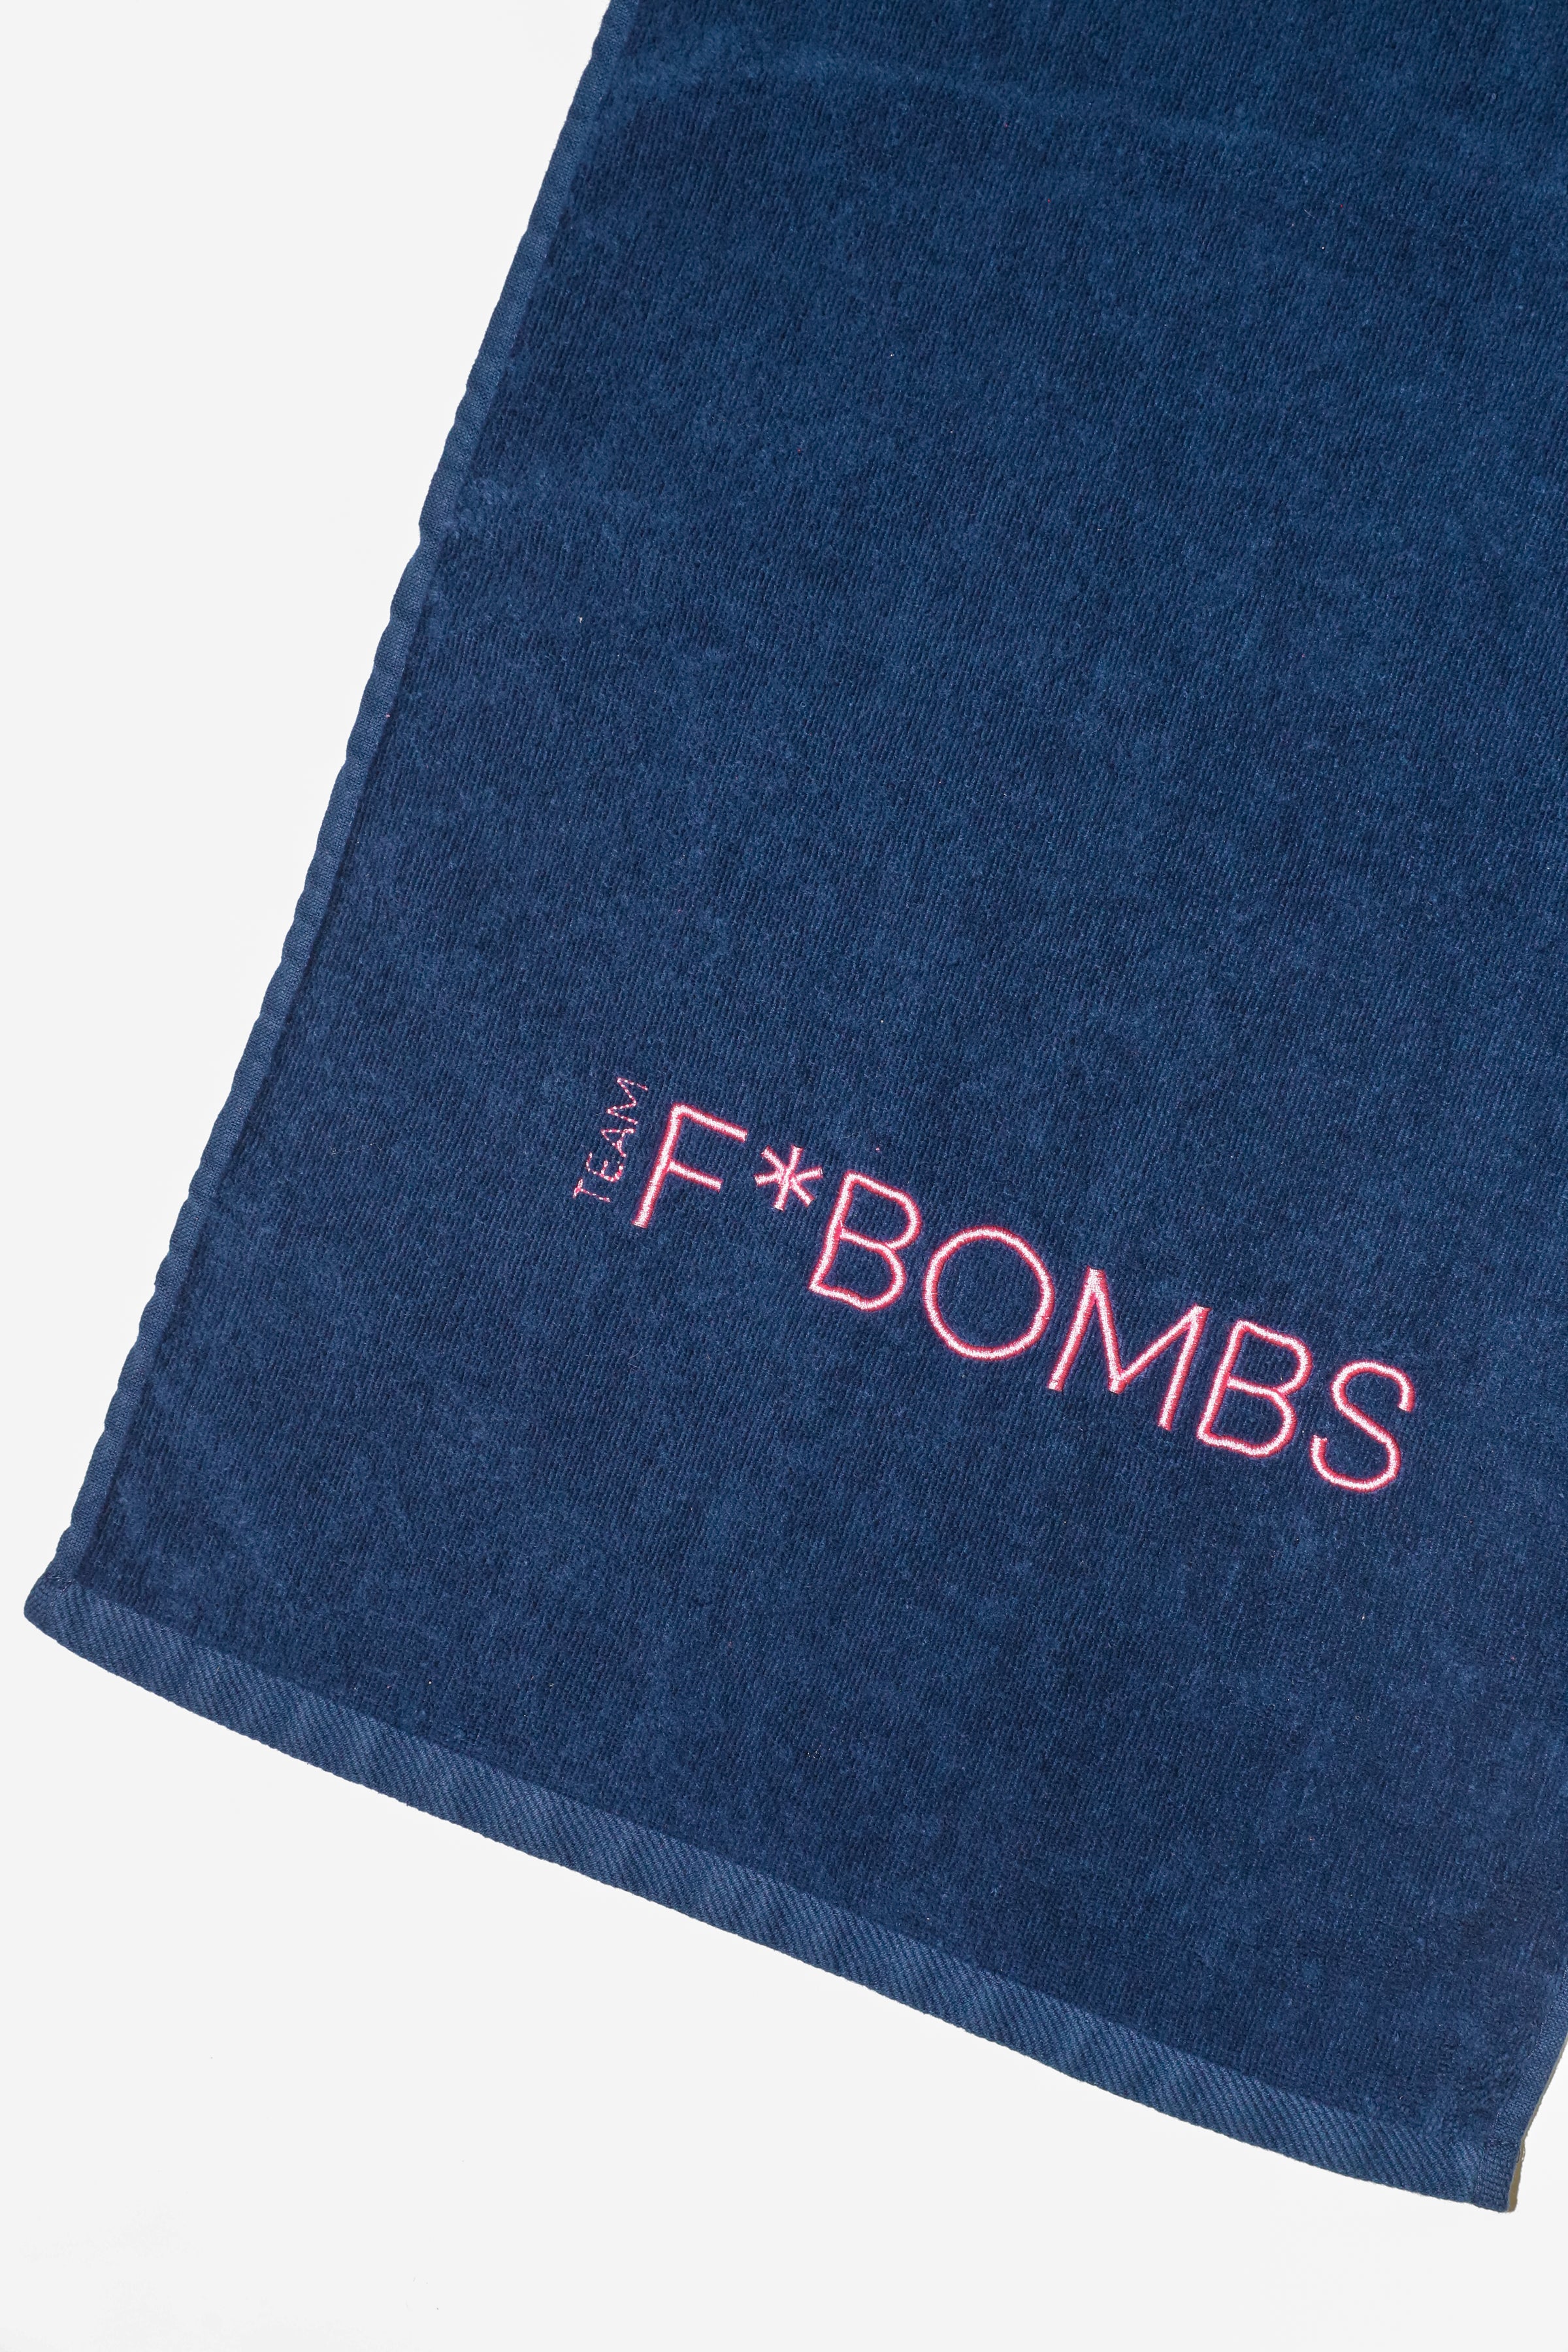 F*Bombs Towel